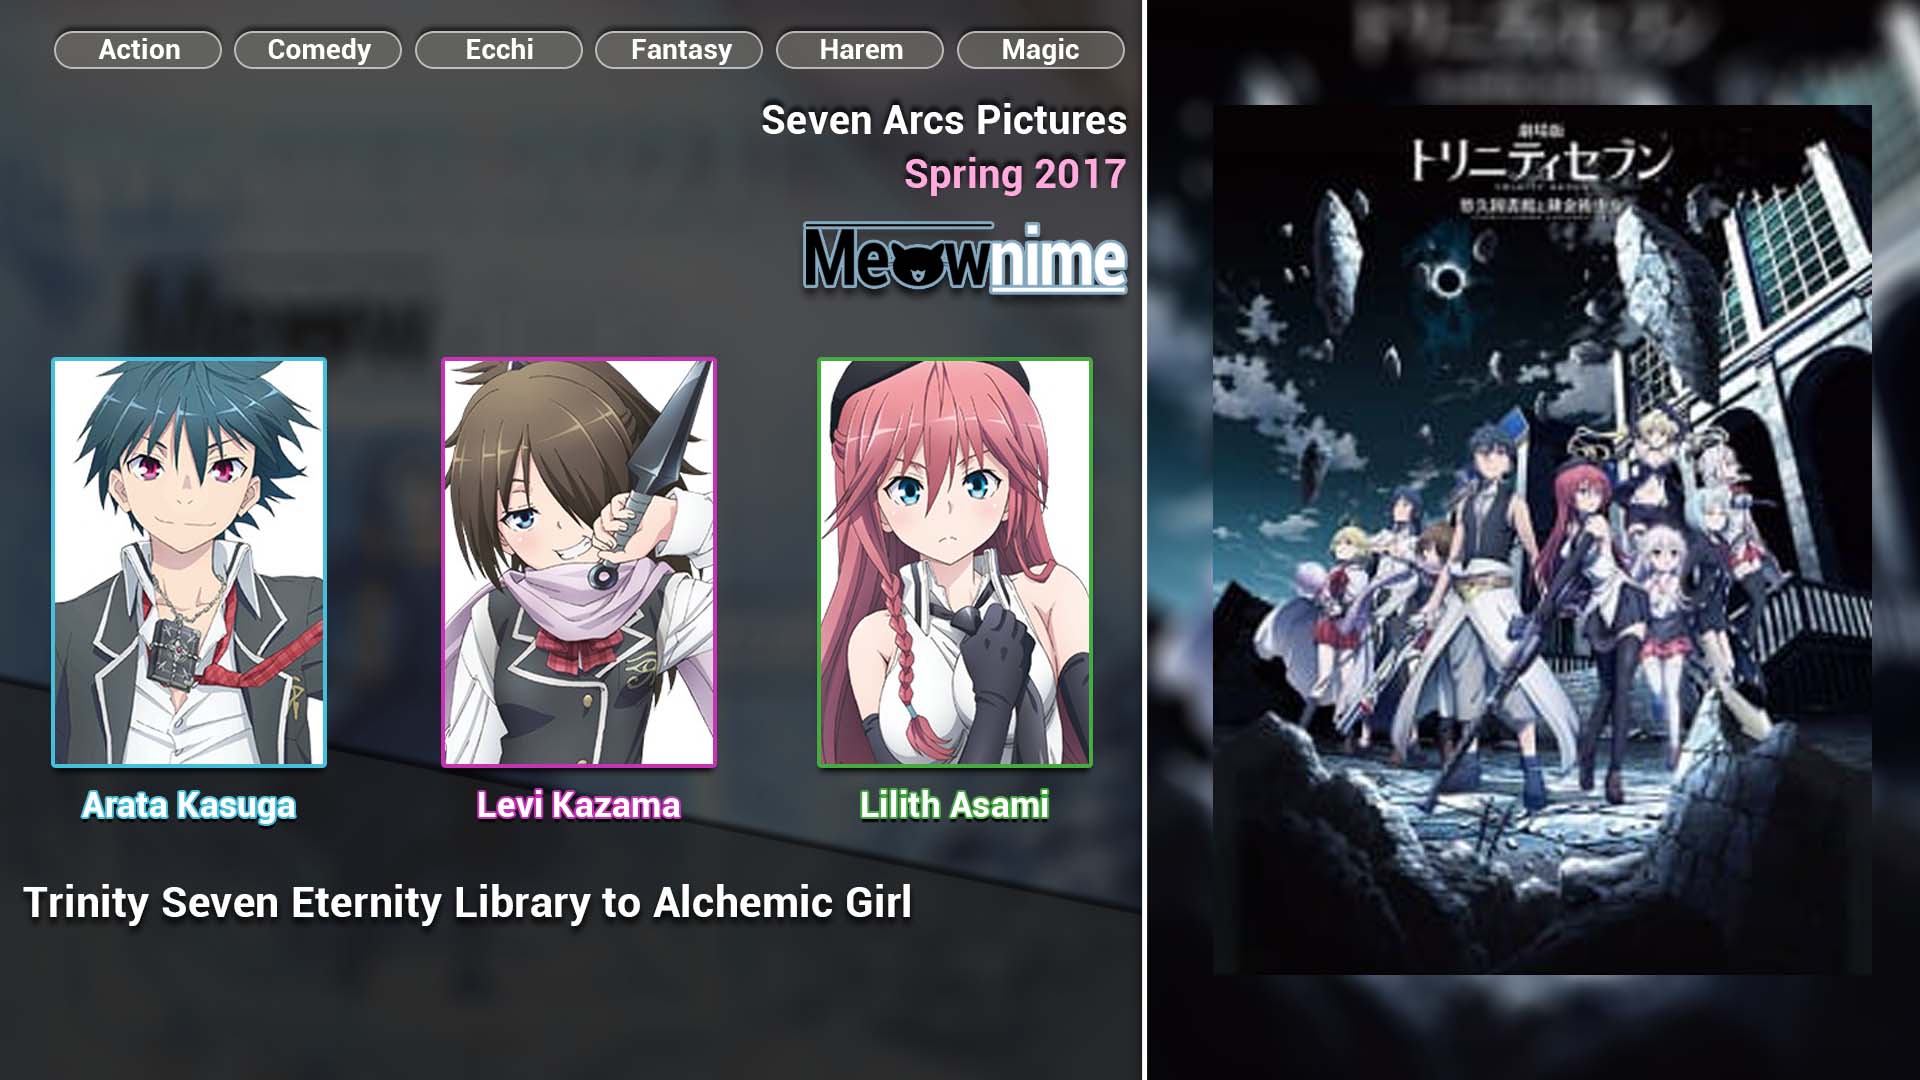 Trinity Seven Eternity Library to Alchemic Girl